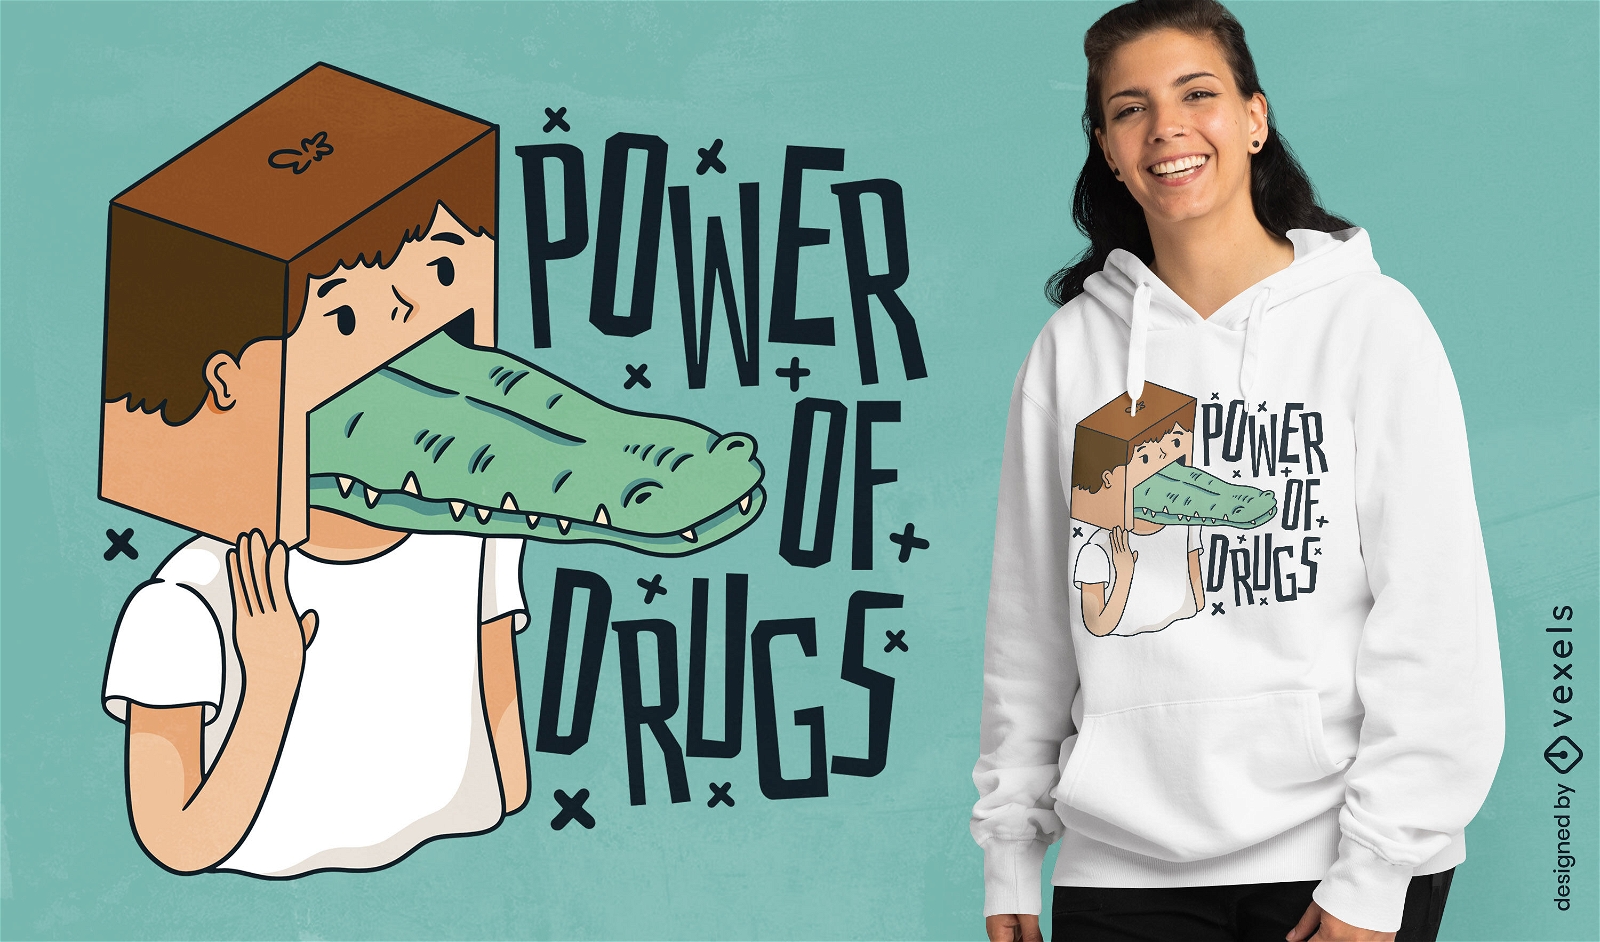 Macht des Drogen-T-Shirt-Designs